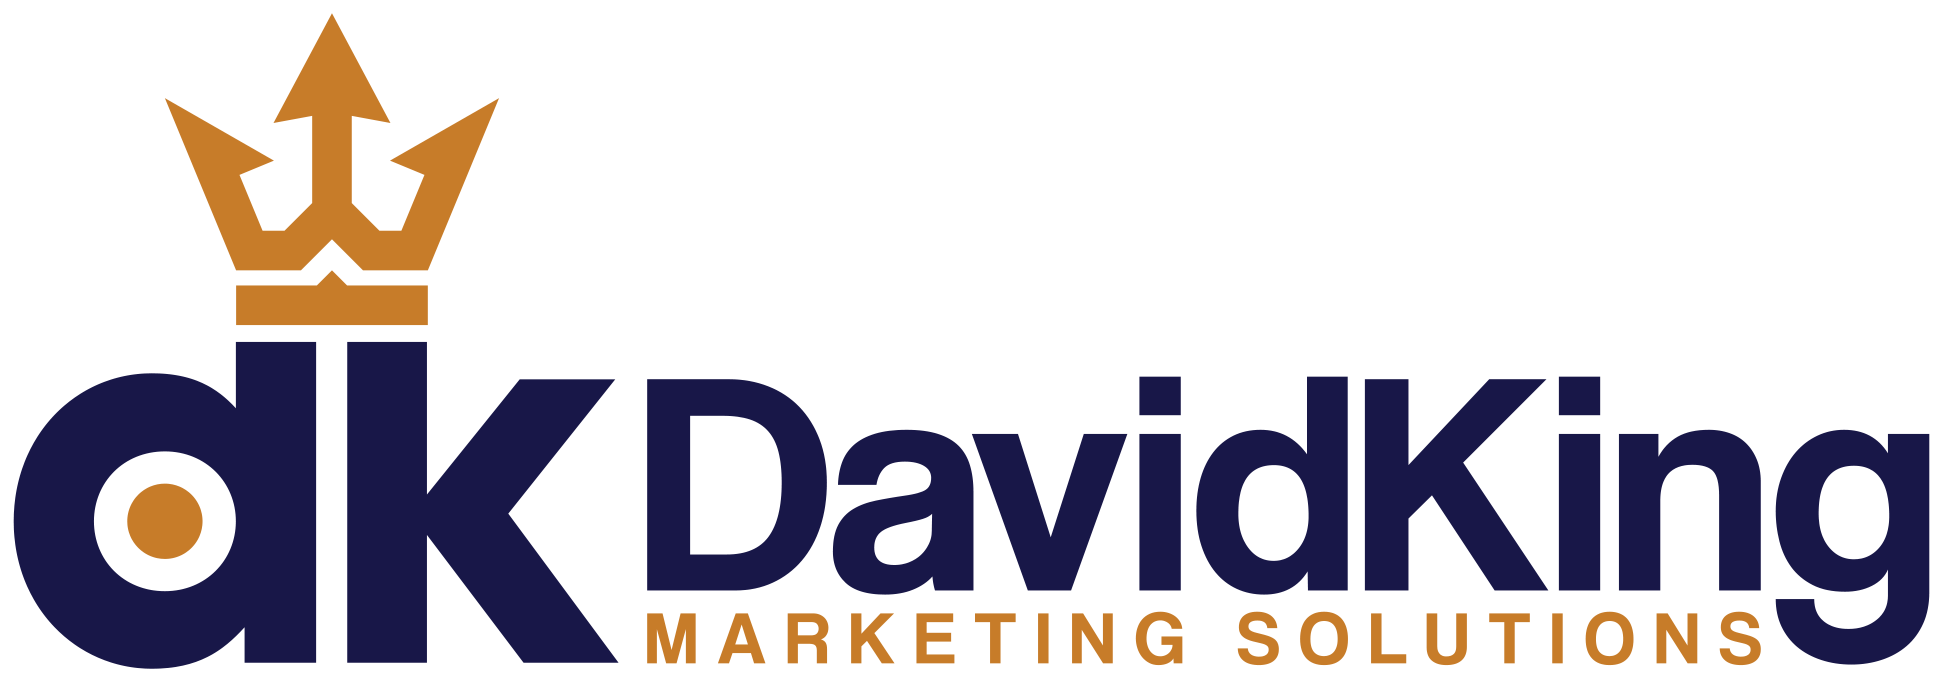 David King Marketing Solutions